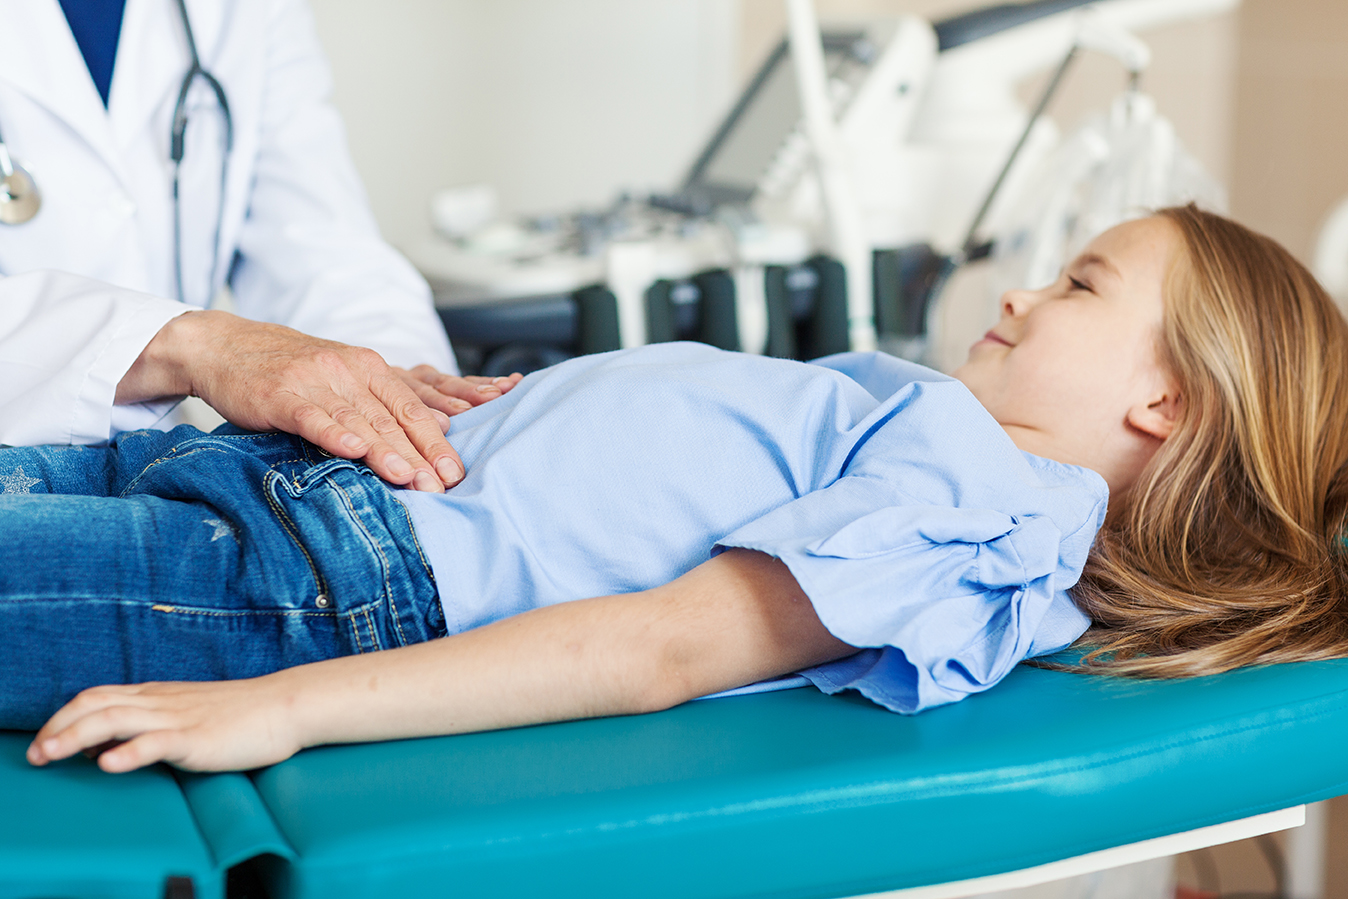 Background image : gastroenterology examination of a little girl